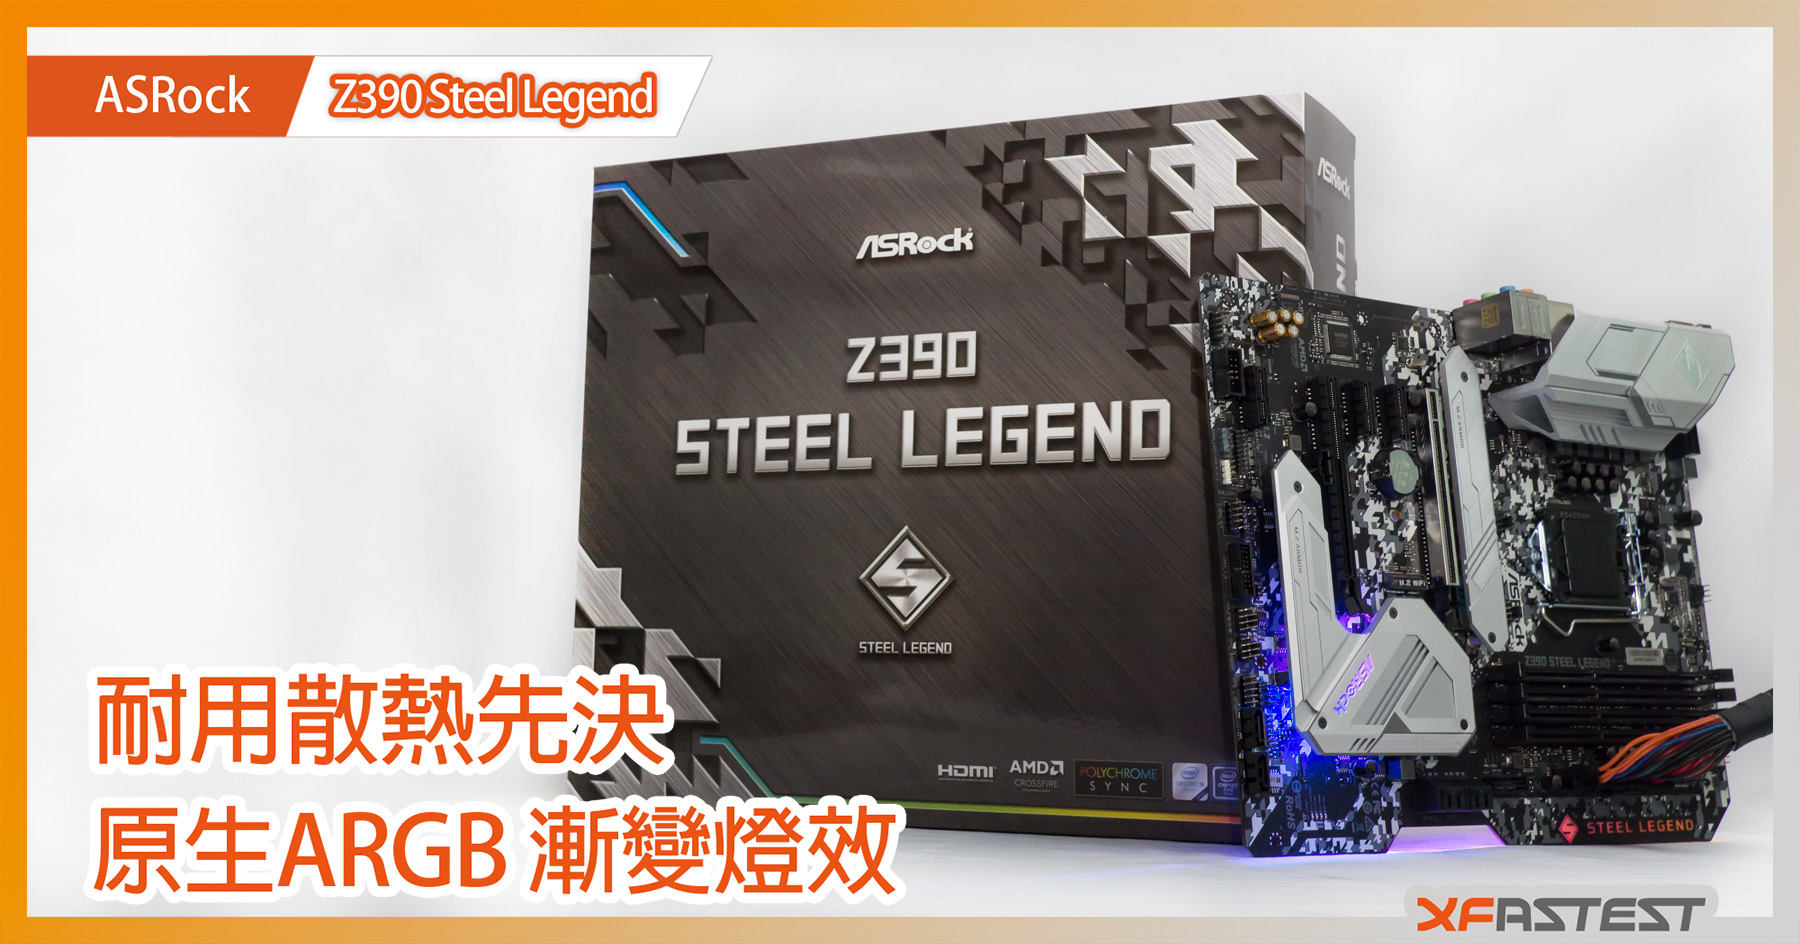 XF開箱] ASRock Z390 Steel Legend - 耐用散熱先決原生ARGB燈效 